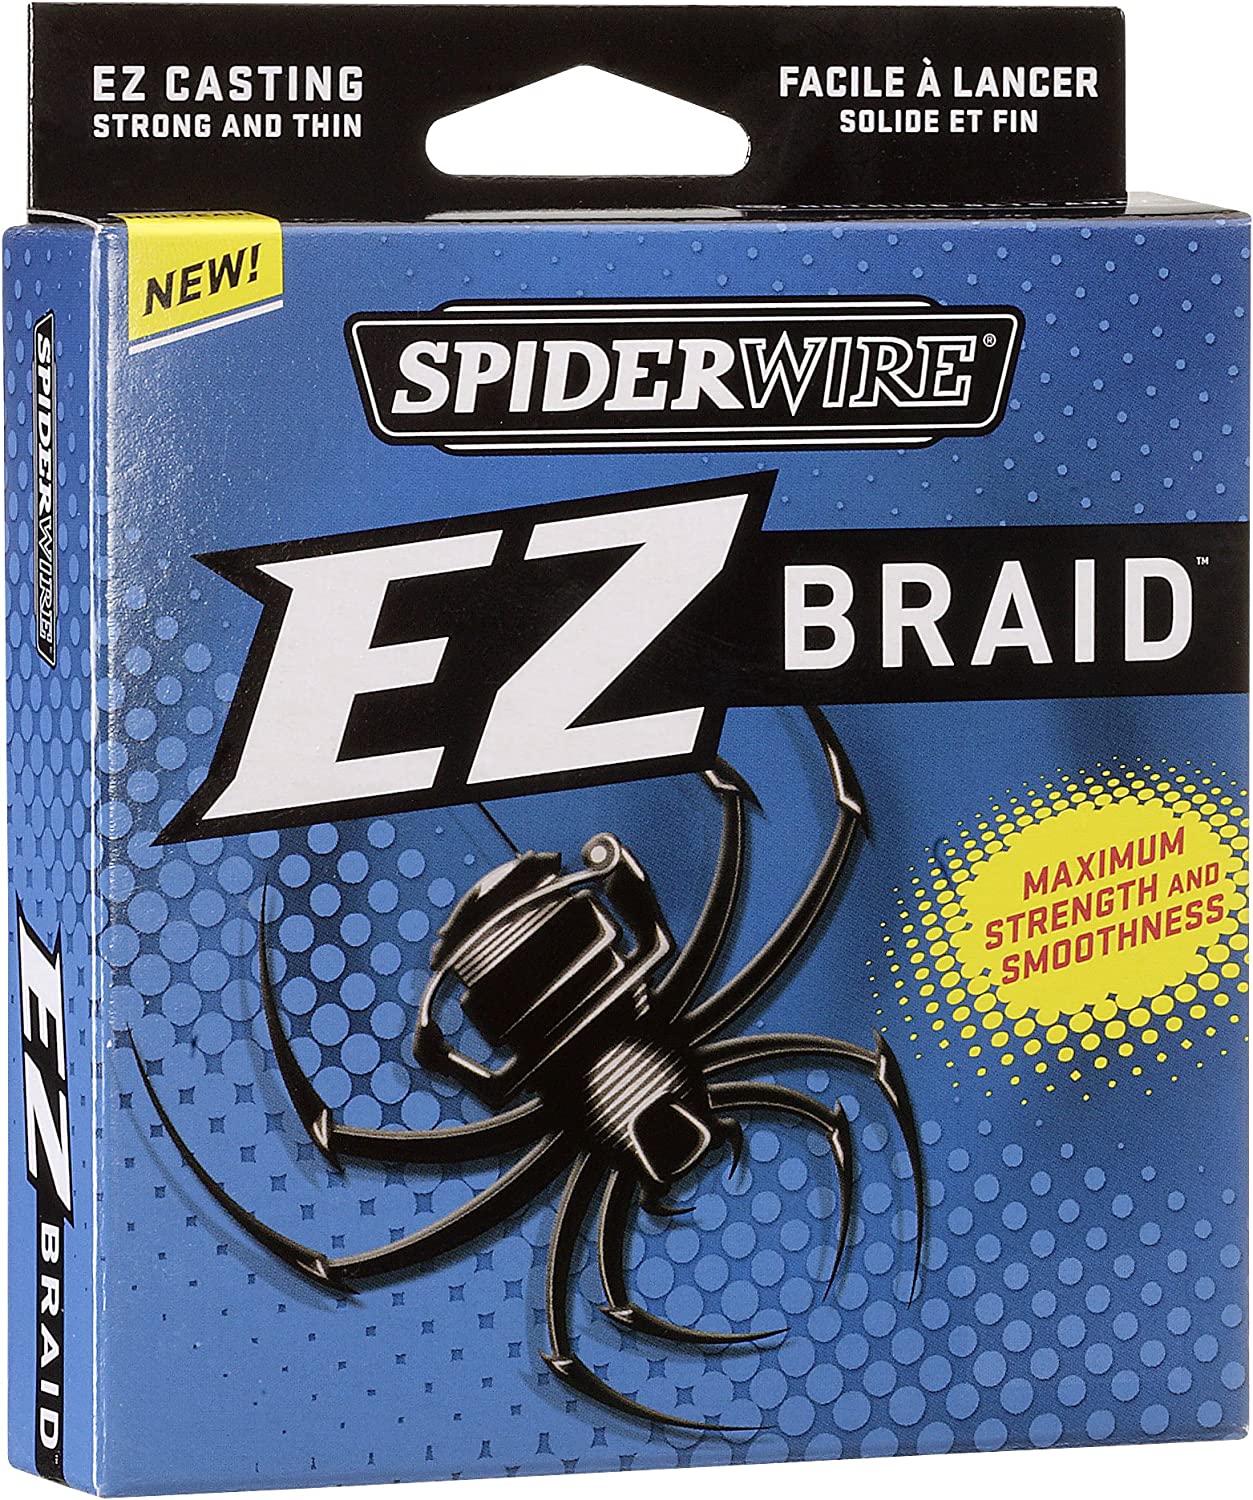 Spiderwire Braid WholeSale - Price List, Bulk Buy at